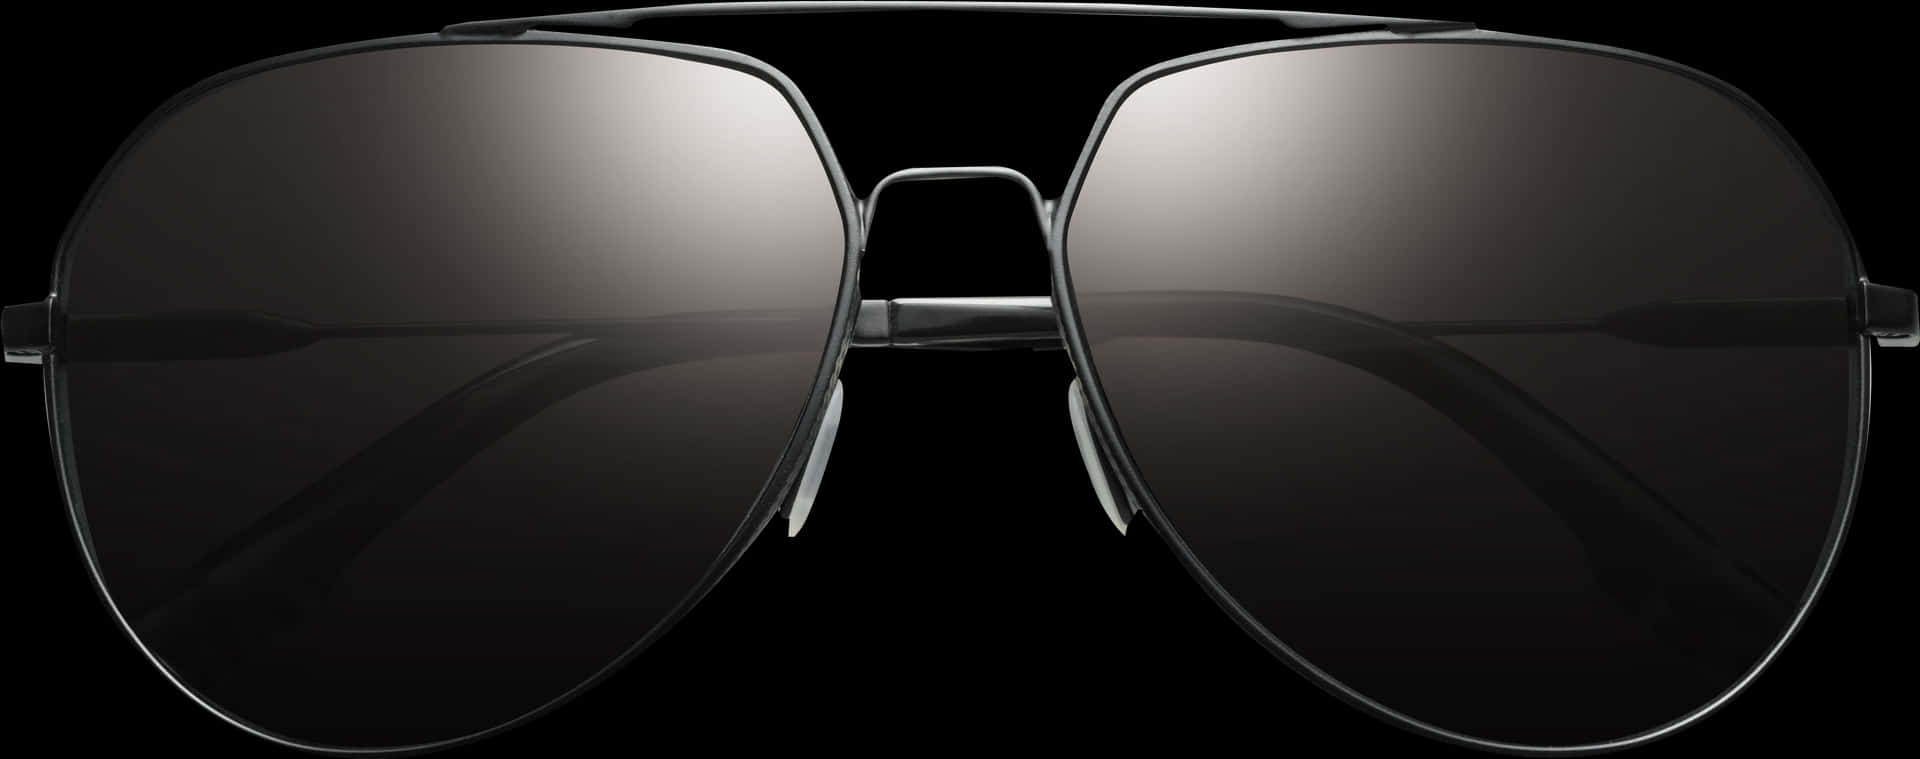 Classic Aviator Sunglasses Black PNG image